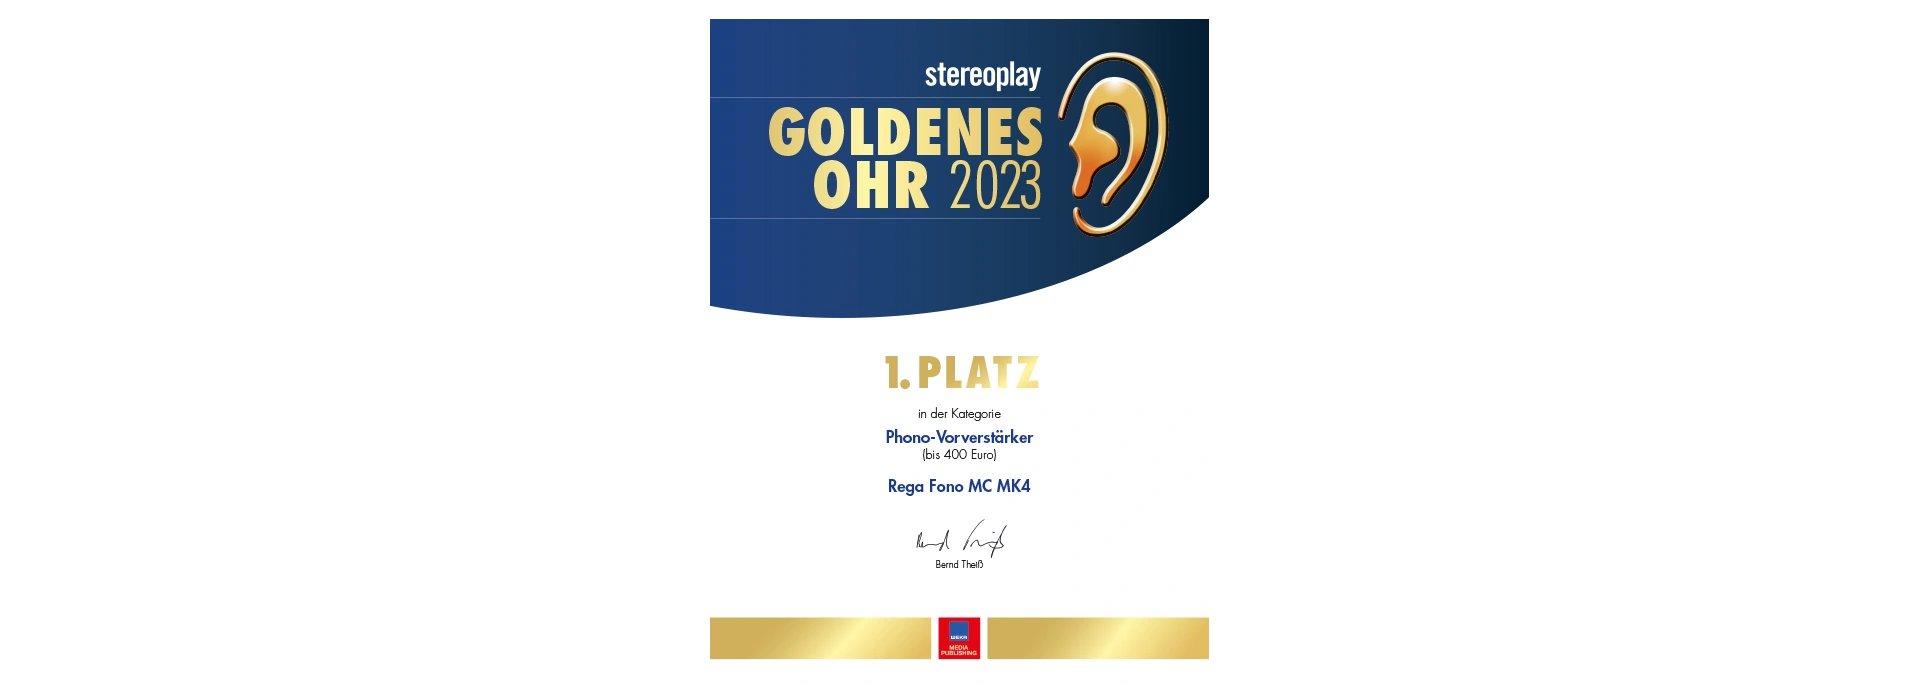 Stereoplay | Goldenes Ohr 2023 | 1. Platz für Rega Fono MC MK4